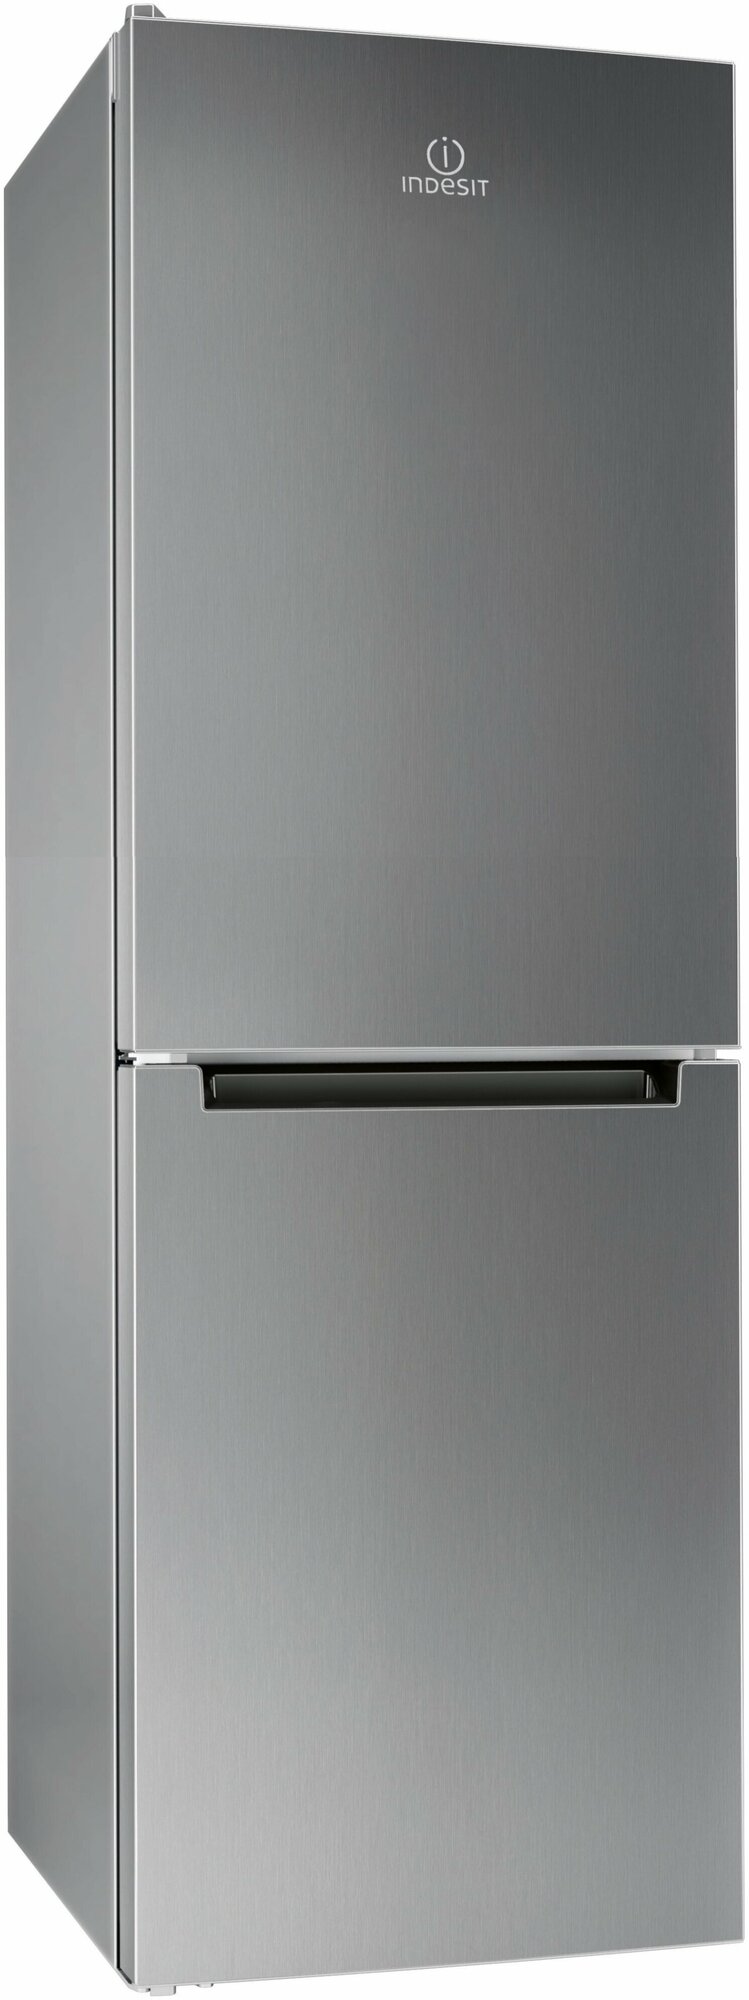 Холодильник Indesit DS 4160 S (серебристый)